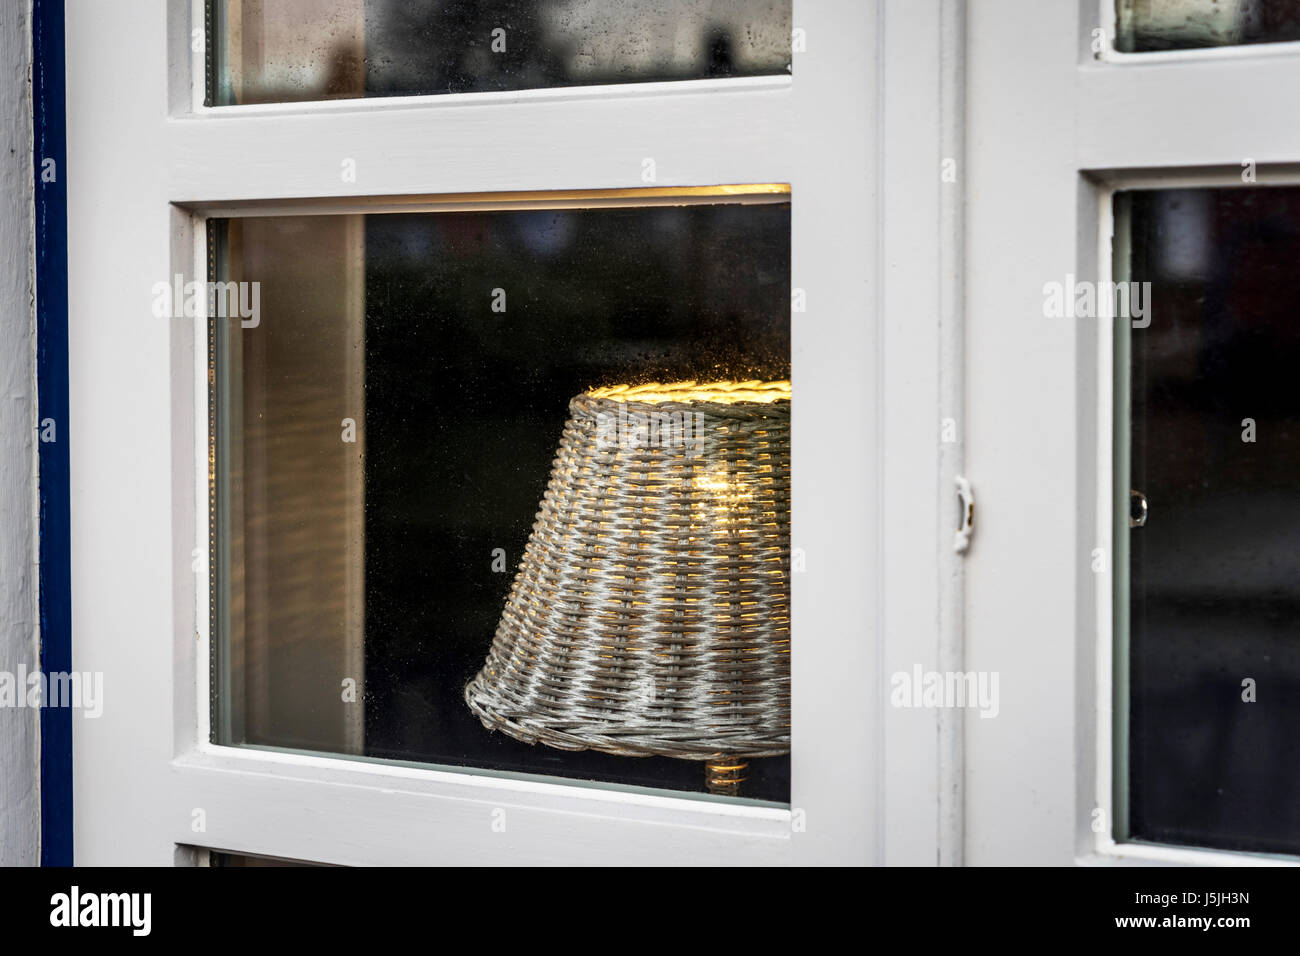 Wellcome home: Illuminated North Frisian window Stock Photo